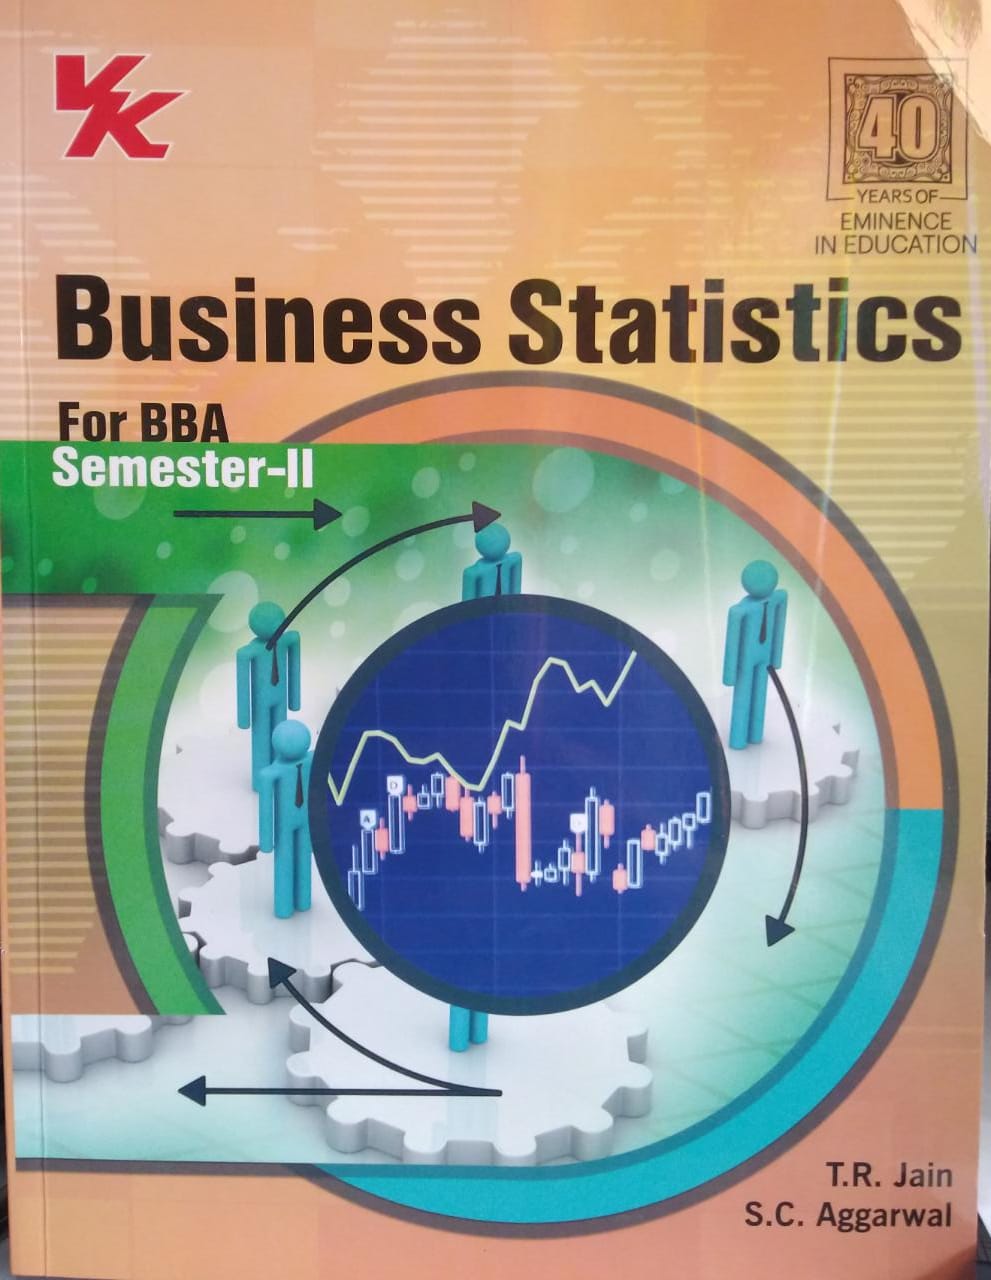 Business Statistics for BBA Sem.2, (P.U) by T.R. Jain & S.C. Aggarwal, VK Global Publications Pvt. Ltd.